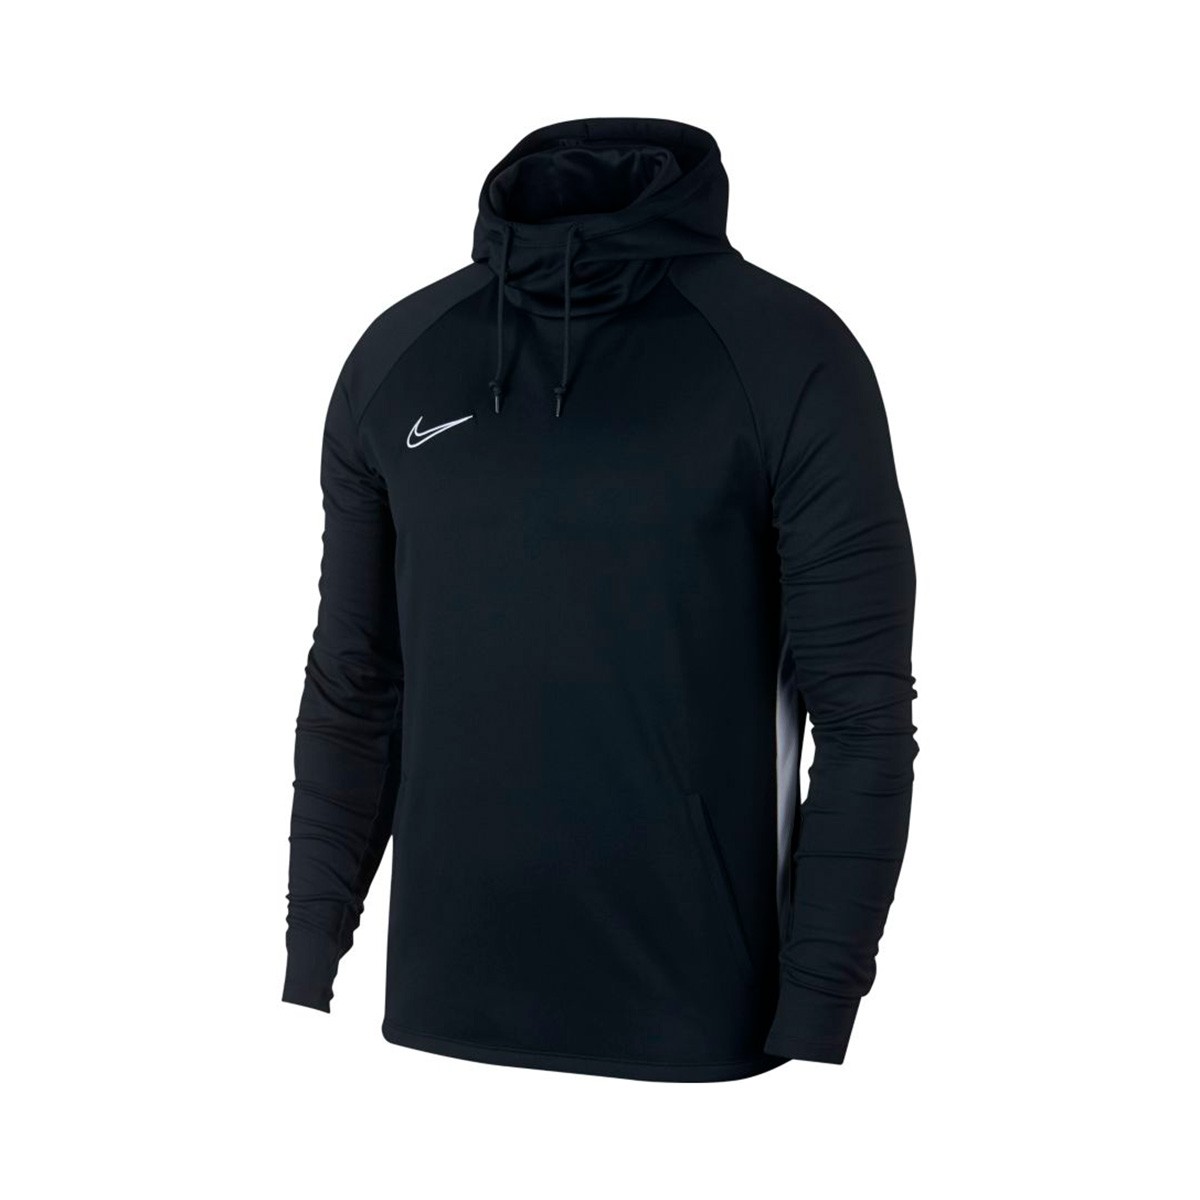 Sweatshirt Nike Dri-FIT Academy Black 